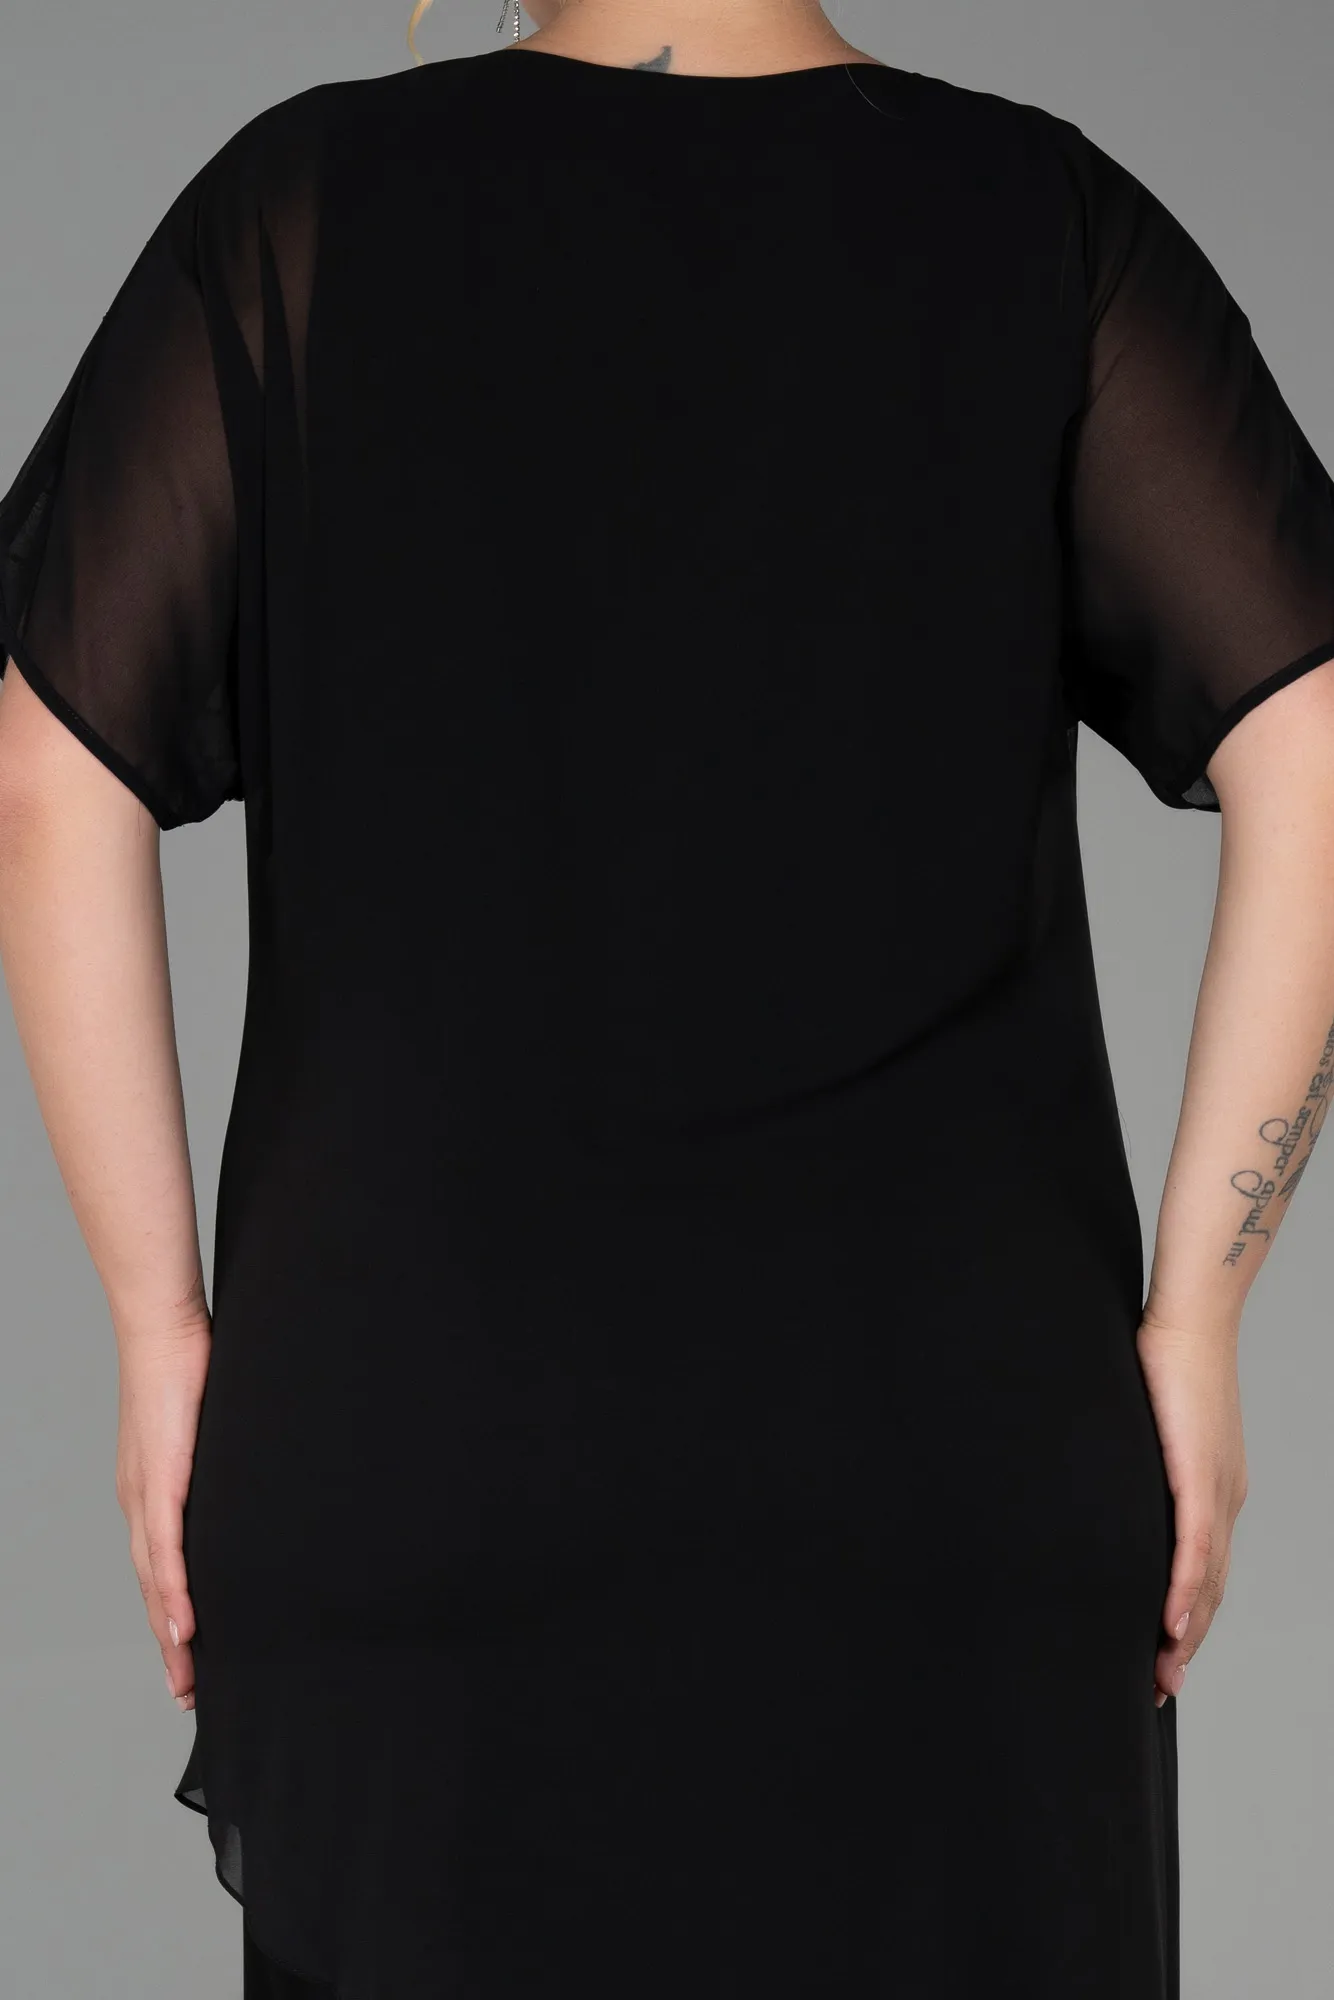 Black-Midi Chiffon Plus Size Evening Dress ABK1856